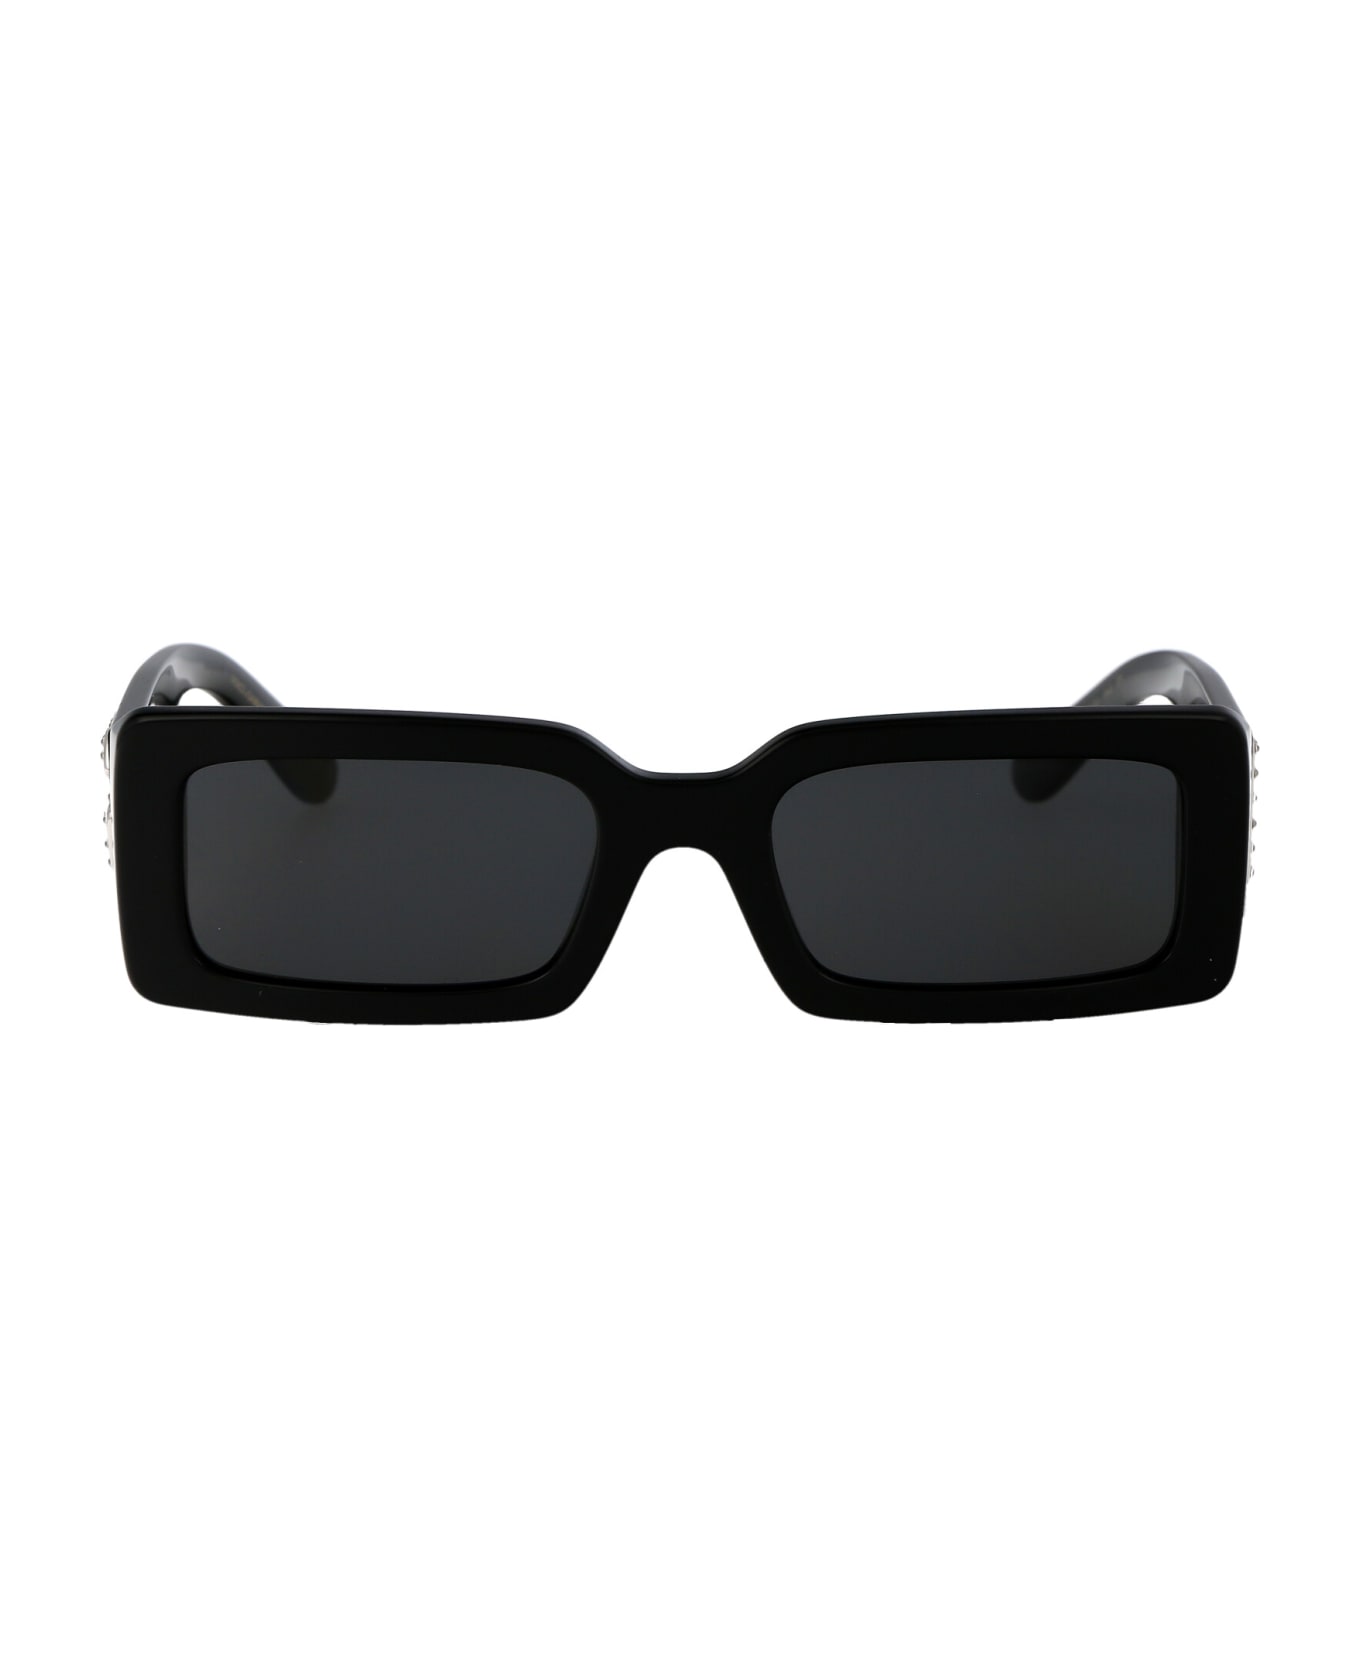 Dolce & Gabbana Eyewear 0dg4447b Sunglasses - 335587 Black サングラス